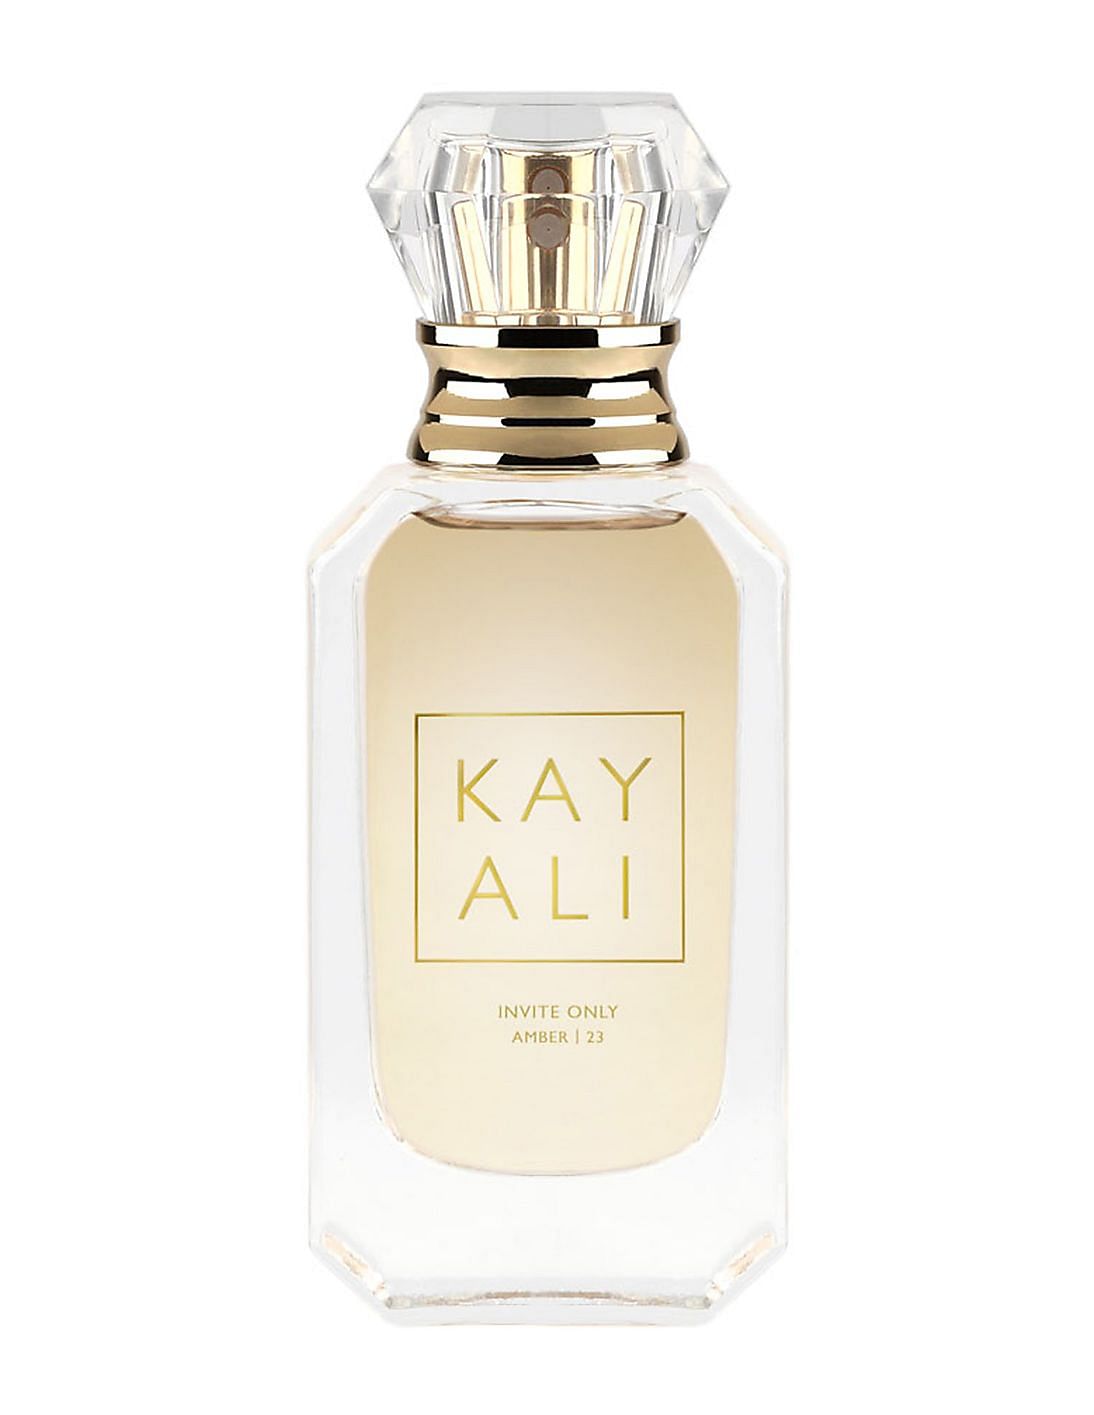 Buy Kayali Invite Only Amber 23 Eau De Parfum - NNNOW.com